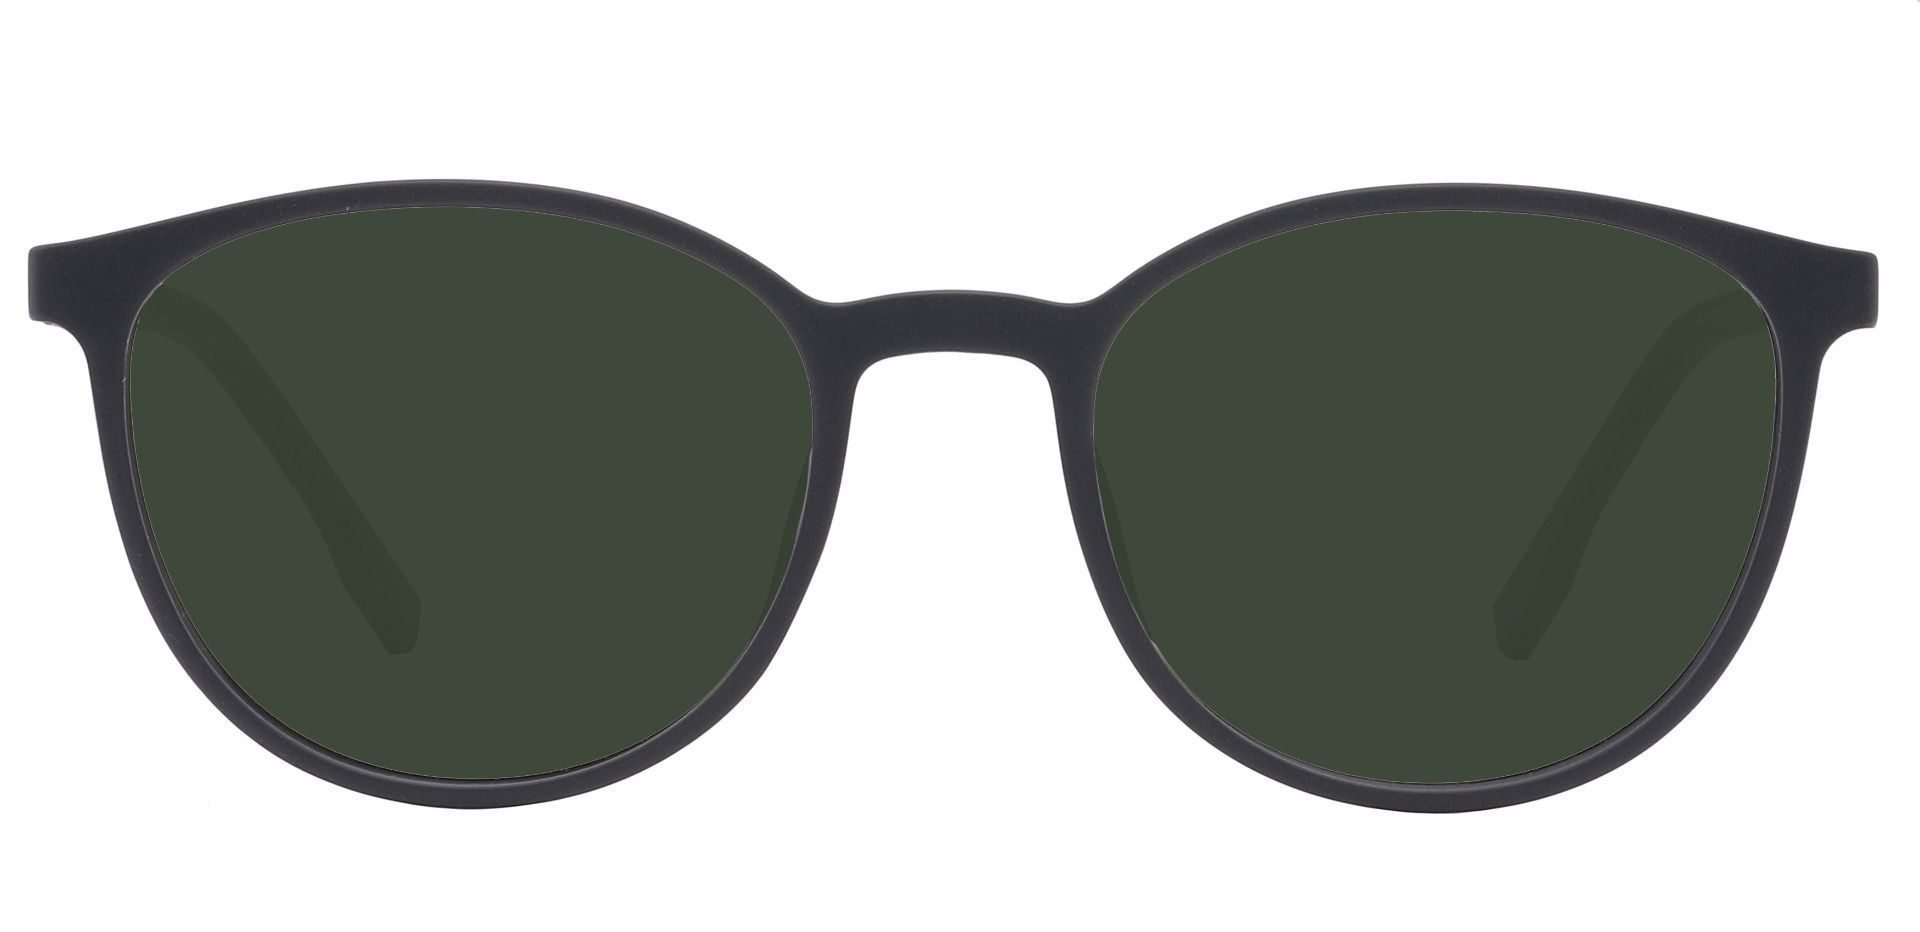 Bay Round Prescription Sunglasses - Black Frame With Green Lenses